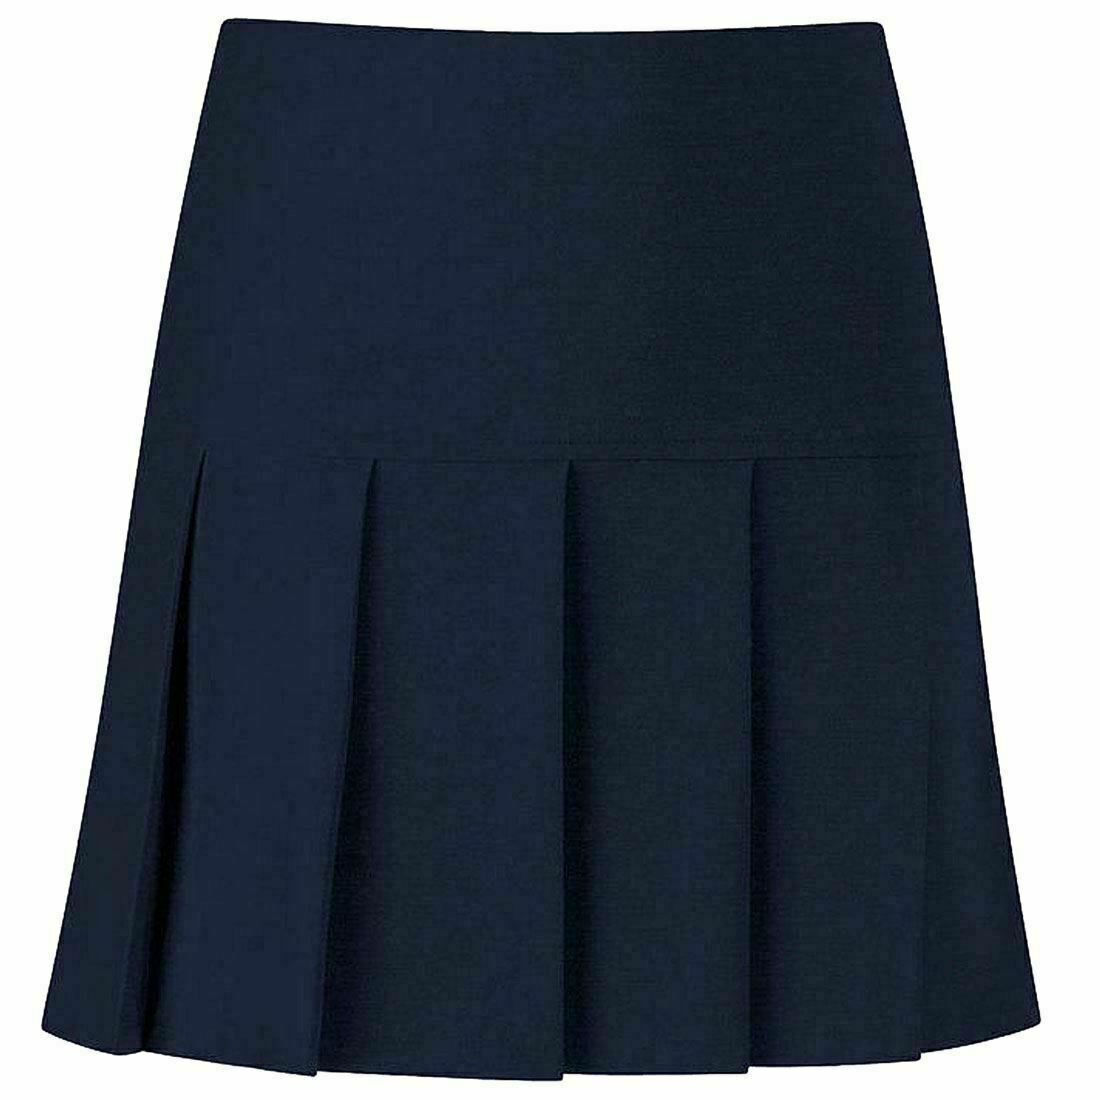 Ladies Uniform Half Drop Pleated Skirt Elasticated All Round Plain Zip Skirt